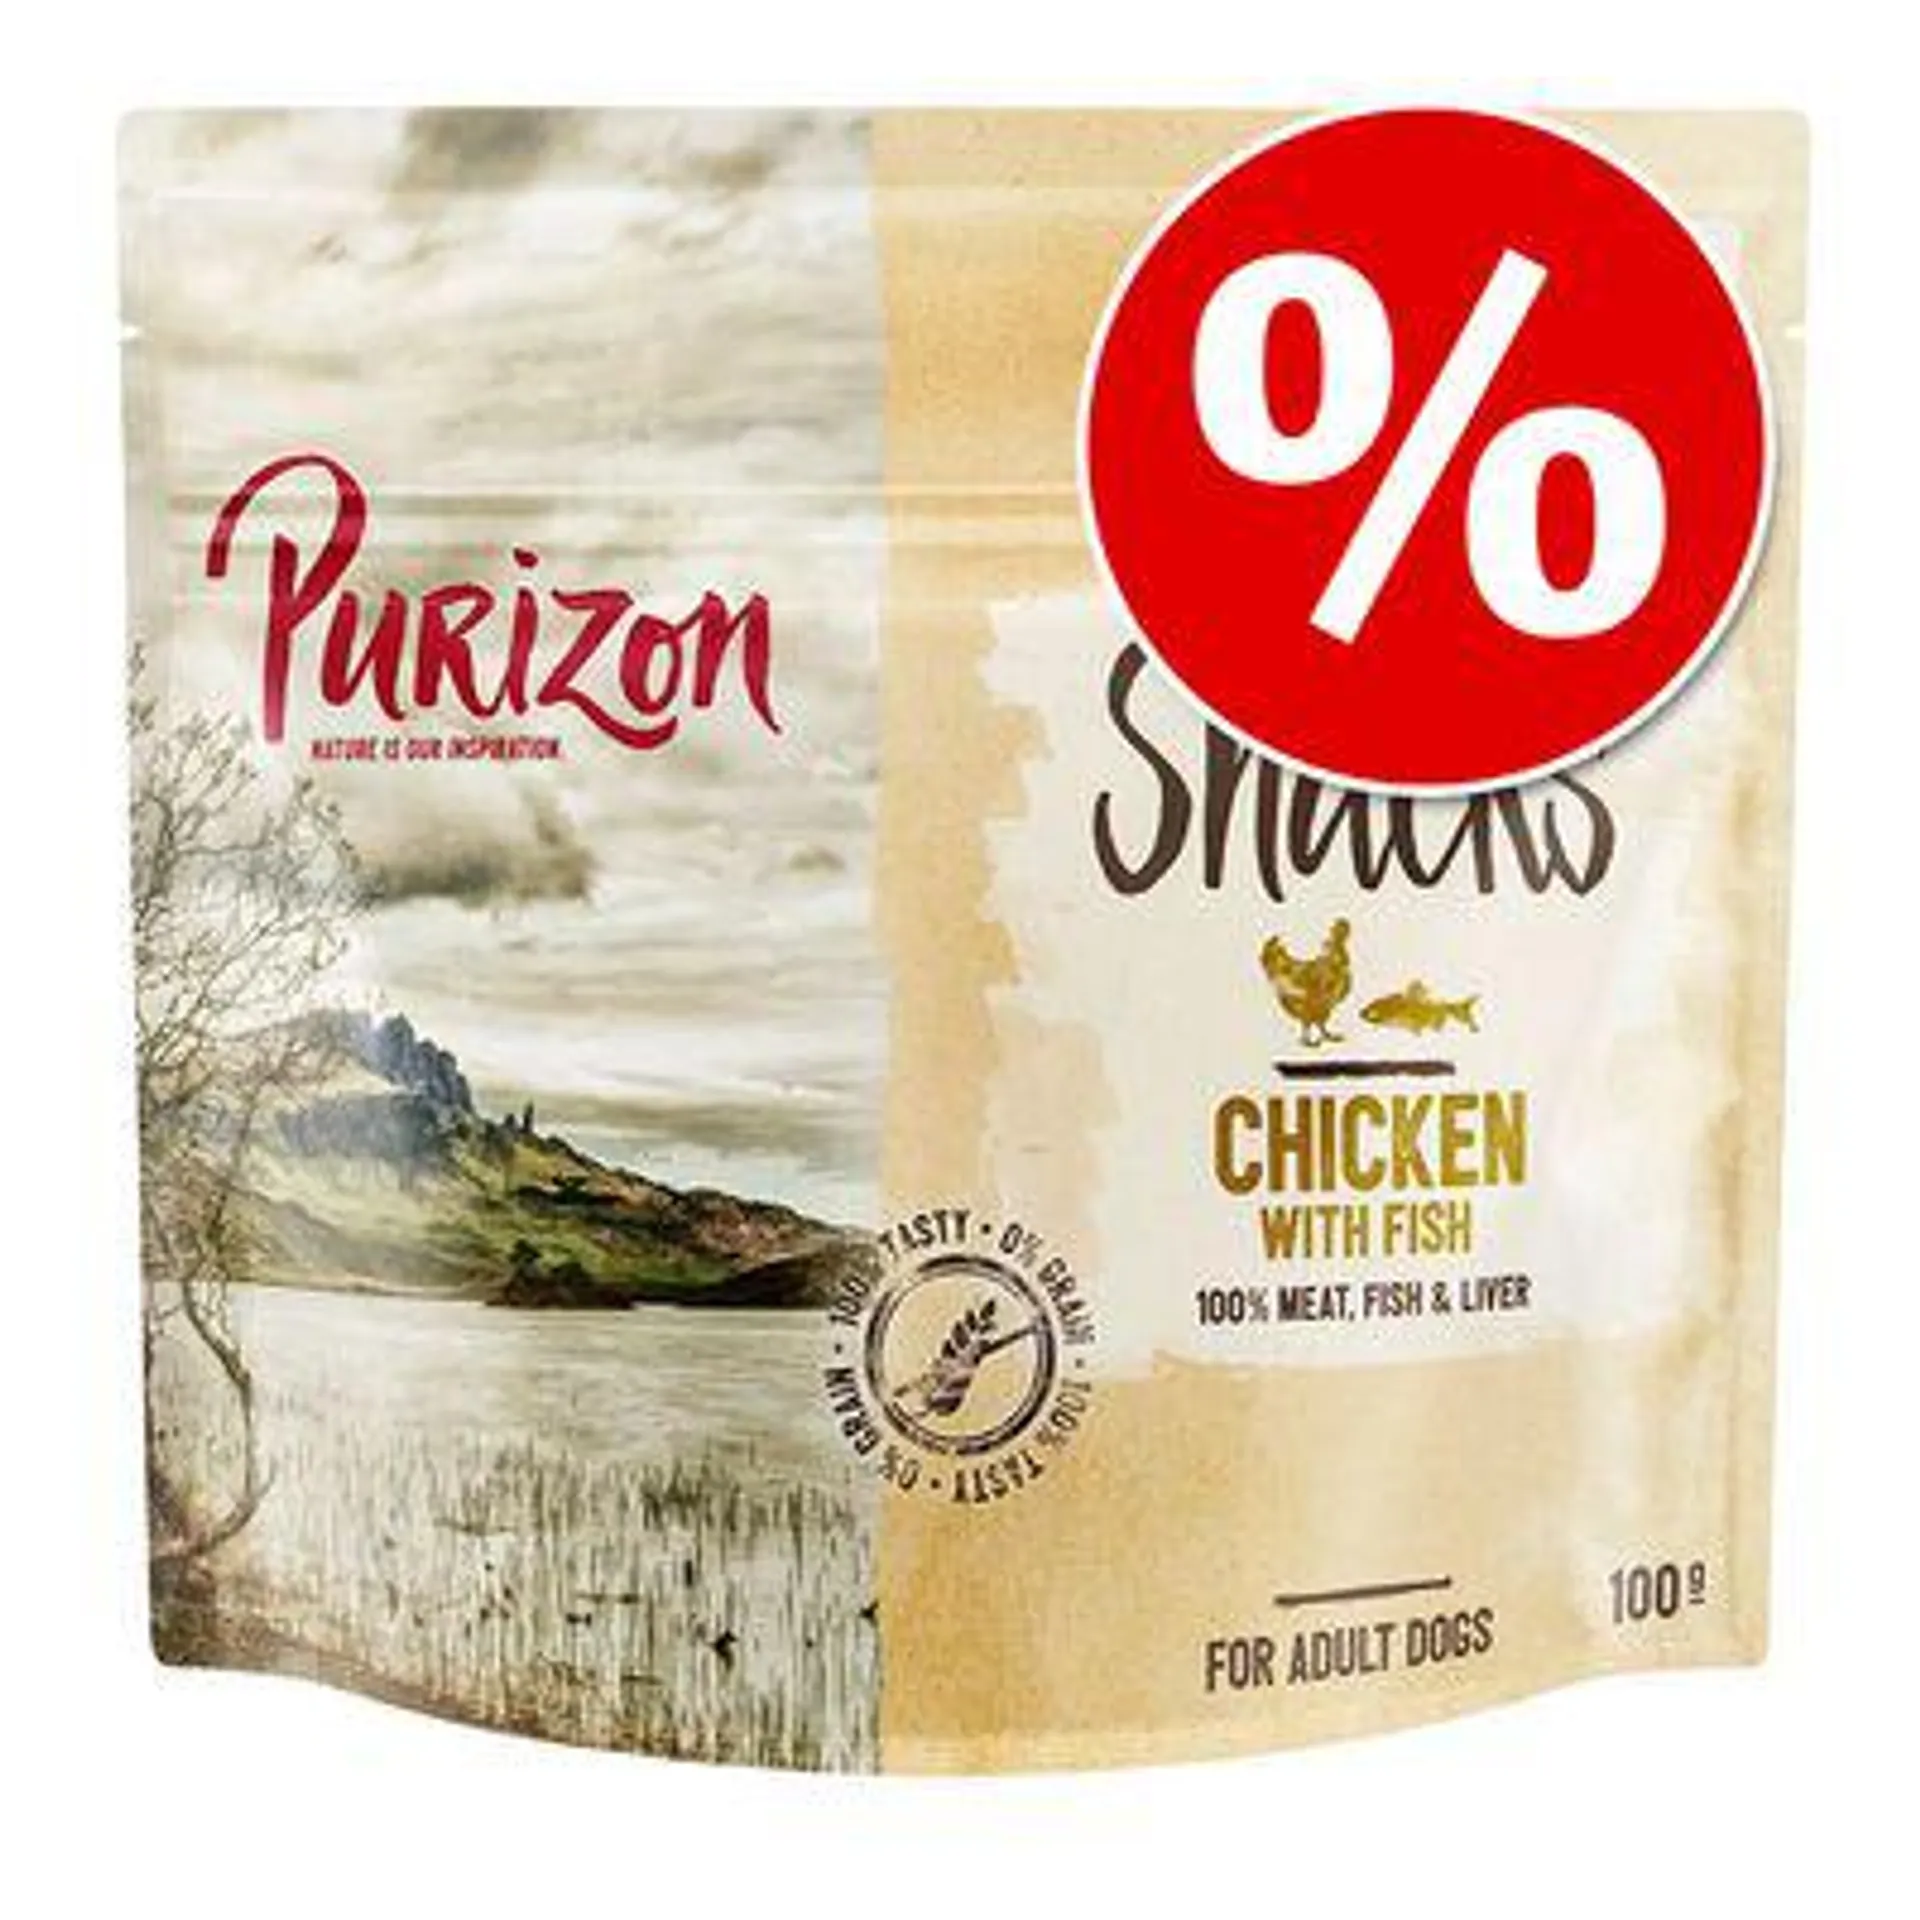 100g Purizon Grain-Free Dog Snacks - Special Price!*